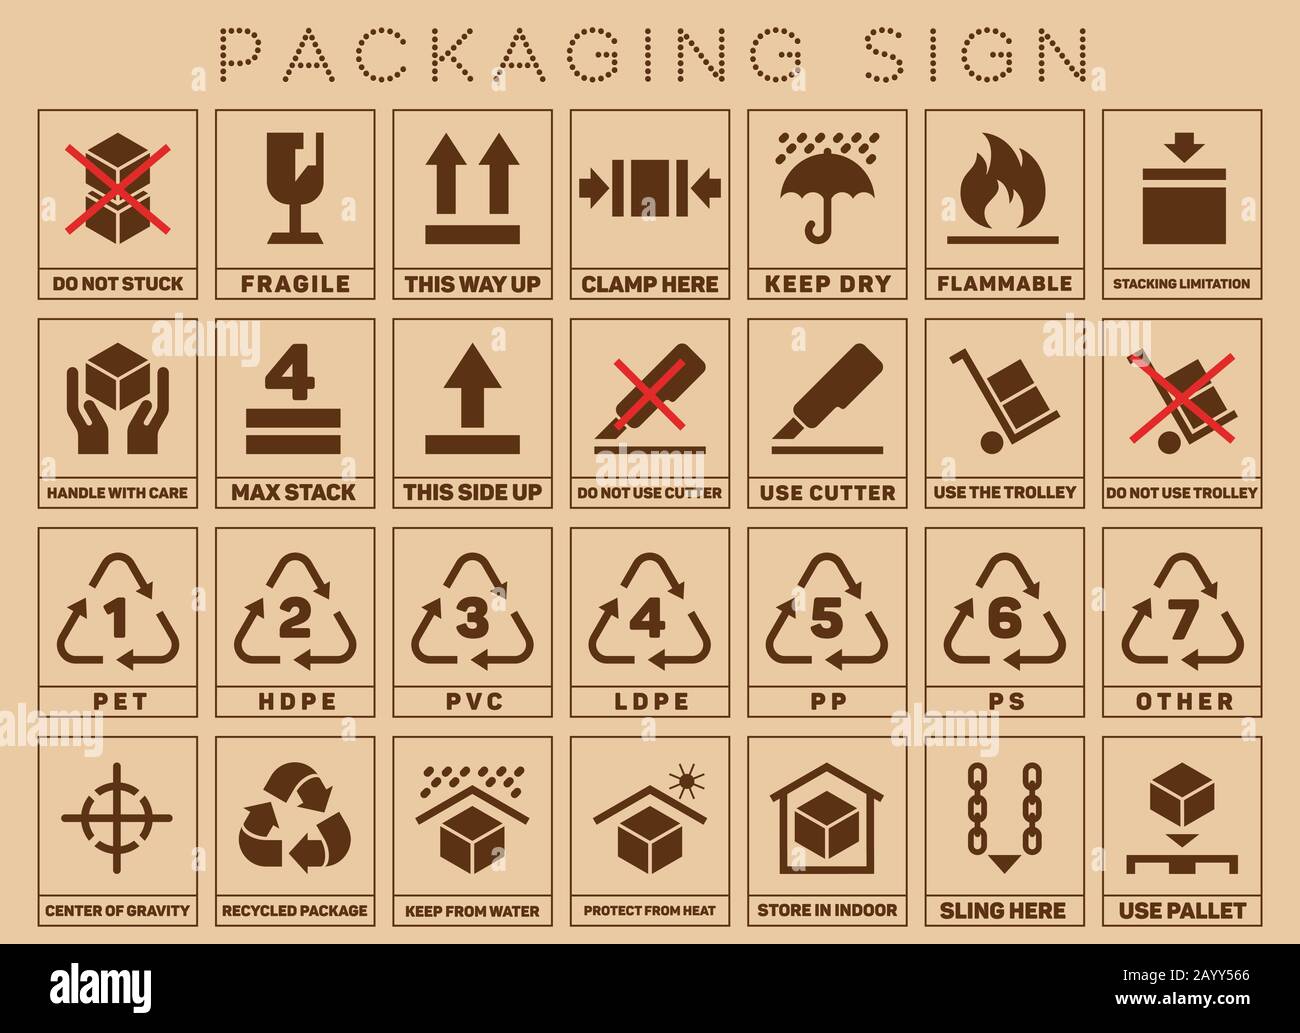 Standard Packaging Symbols